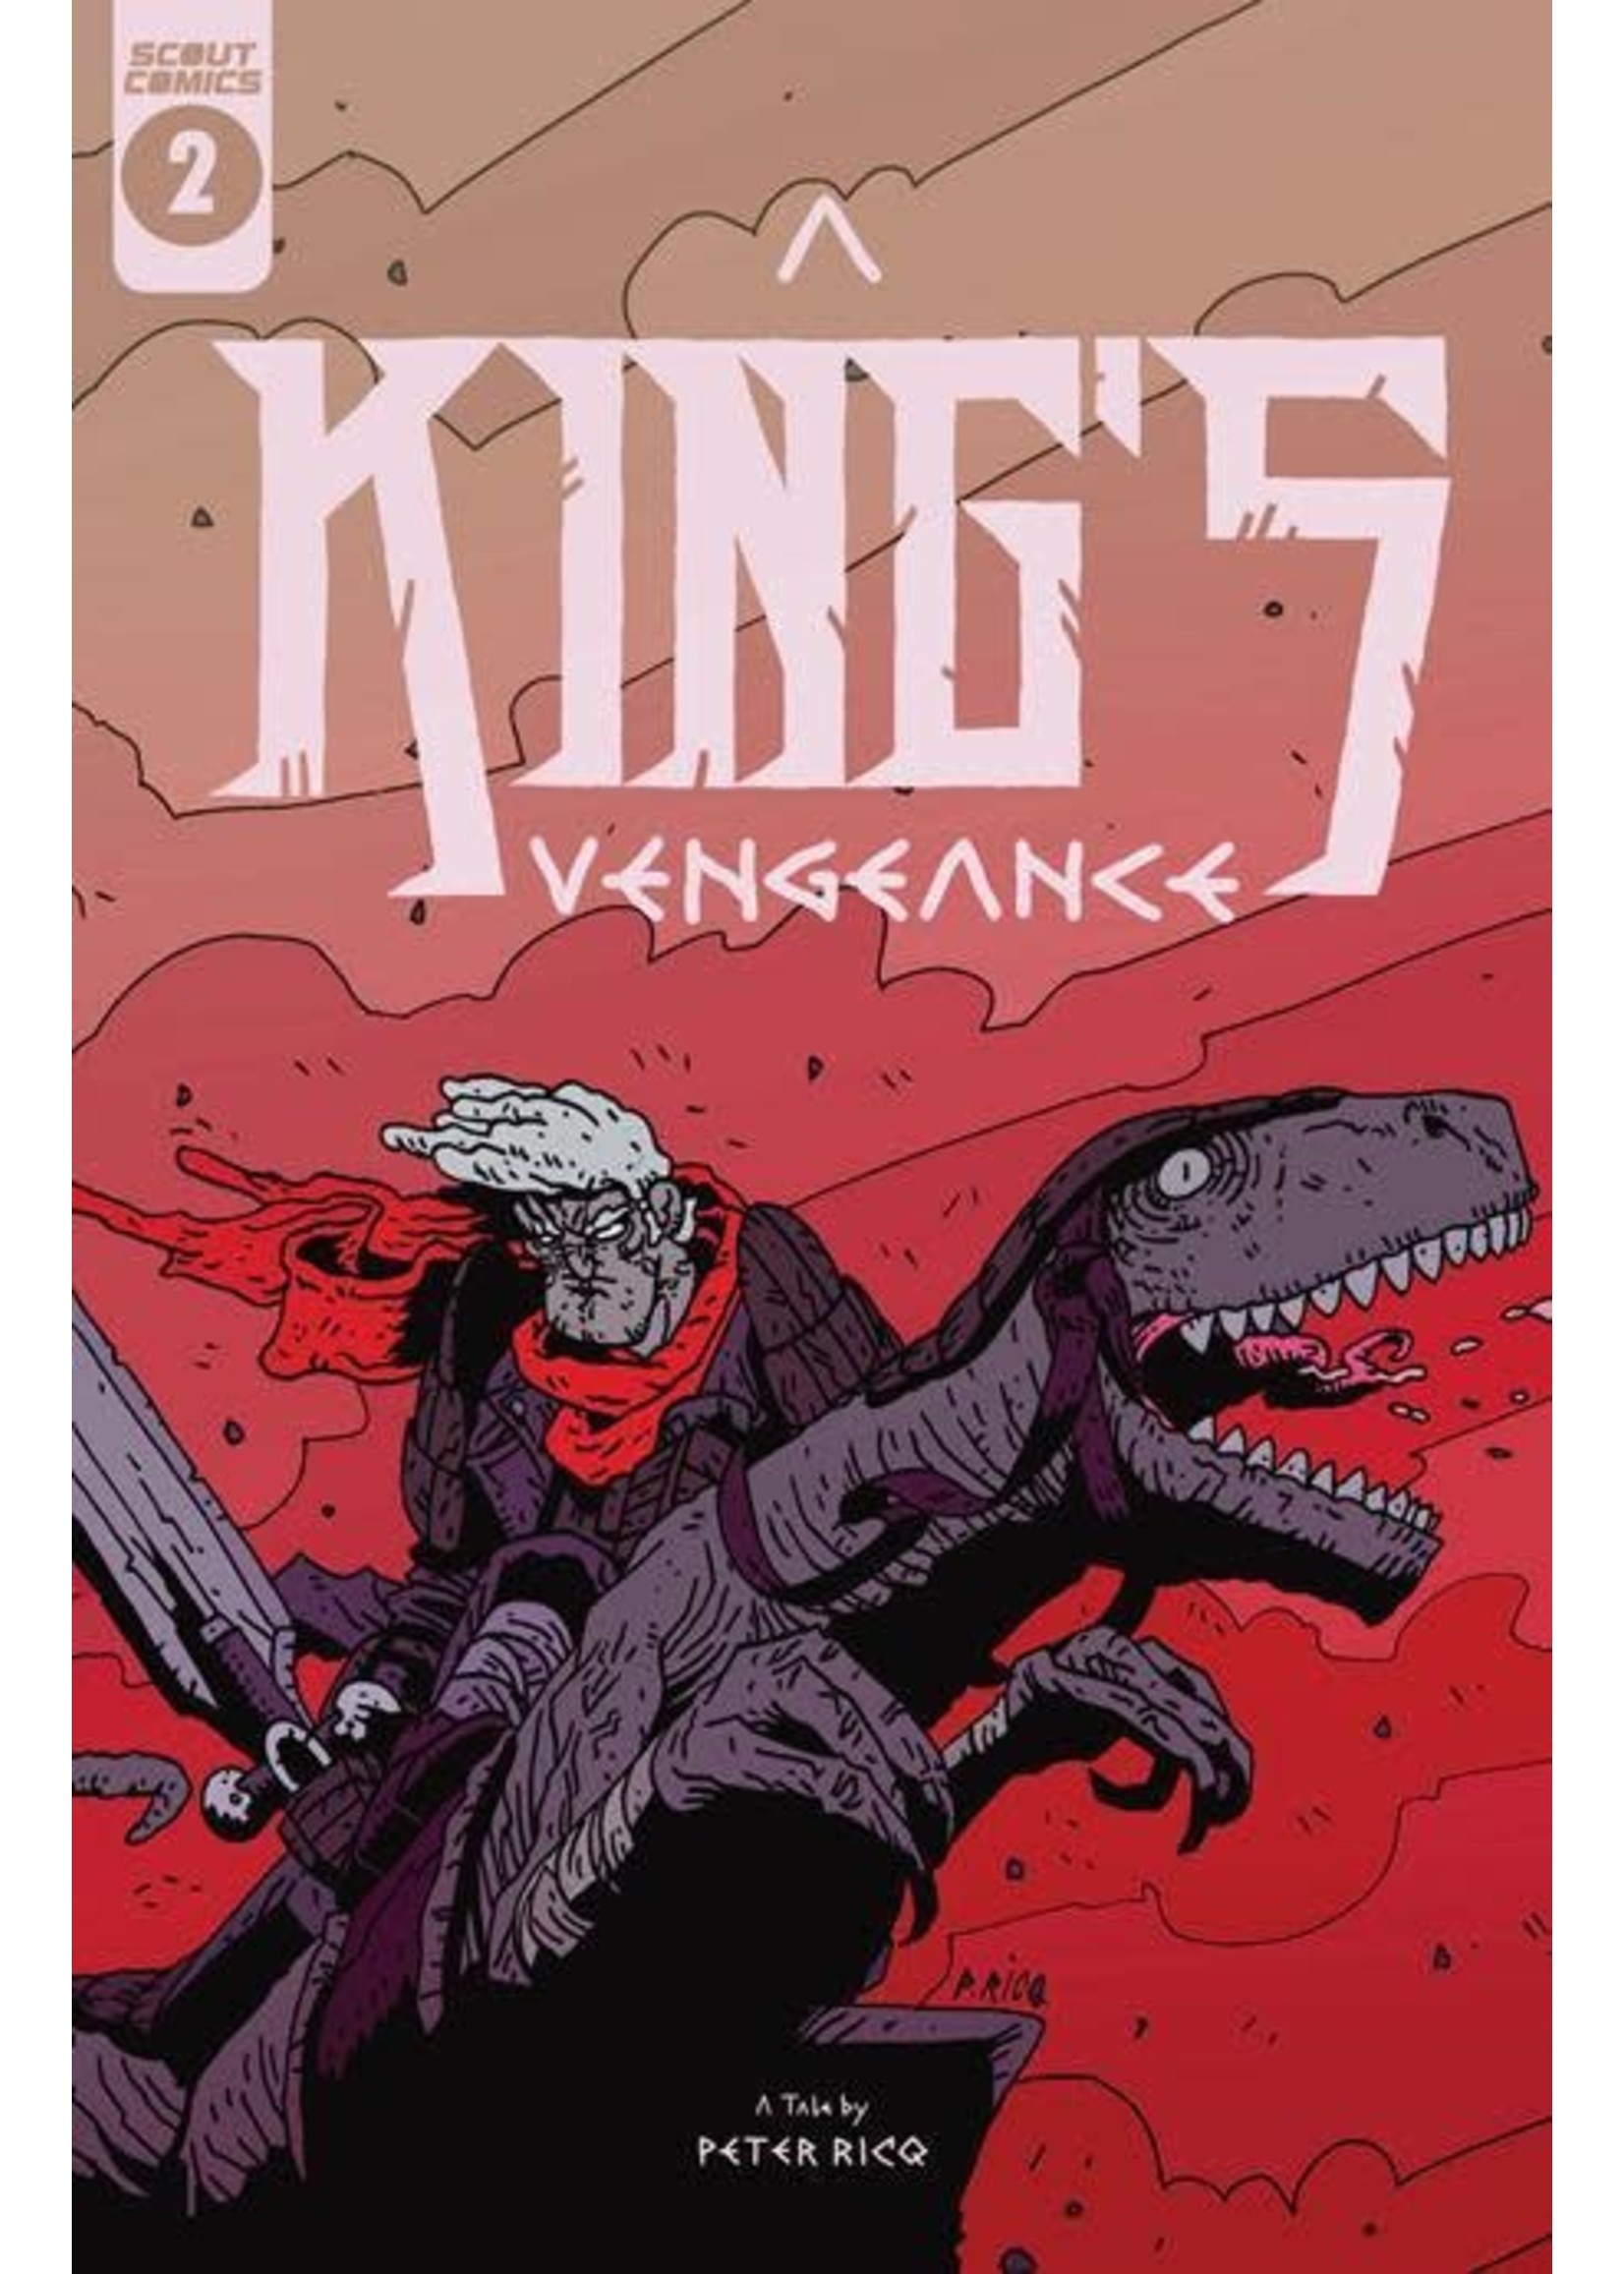 A King's Vengeance #2